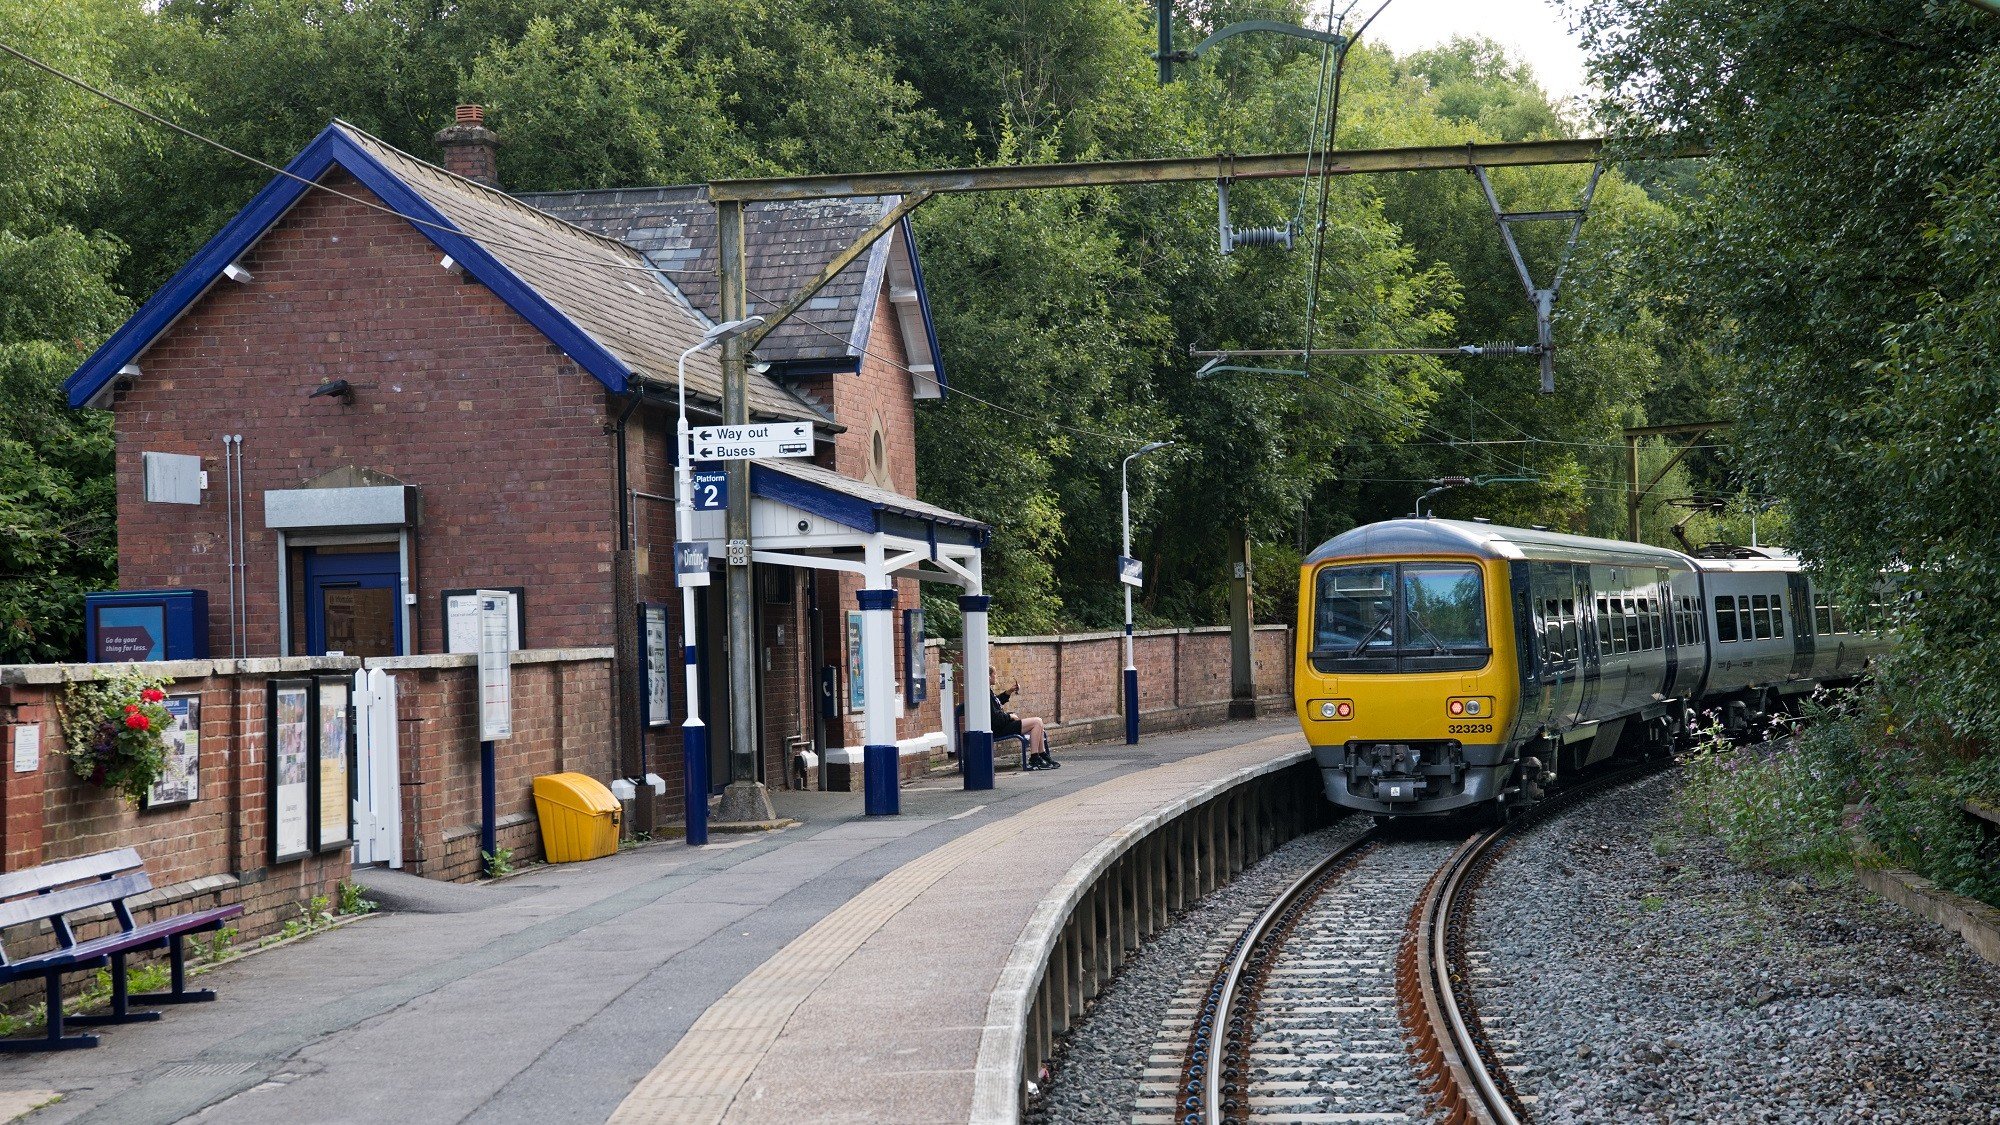 Image shows passenger sat at station as Northern train arrives